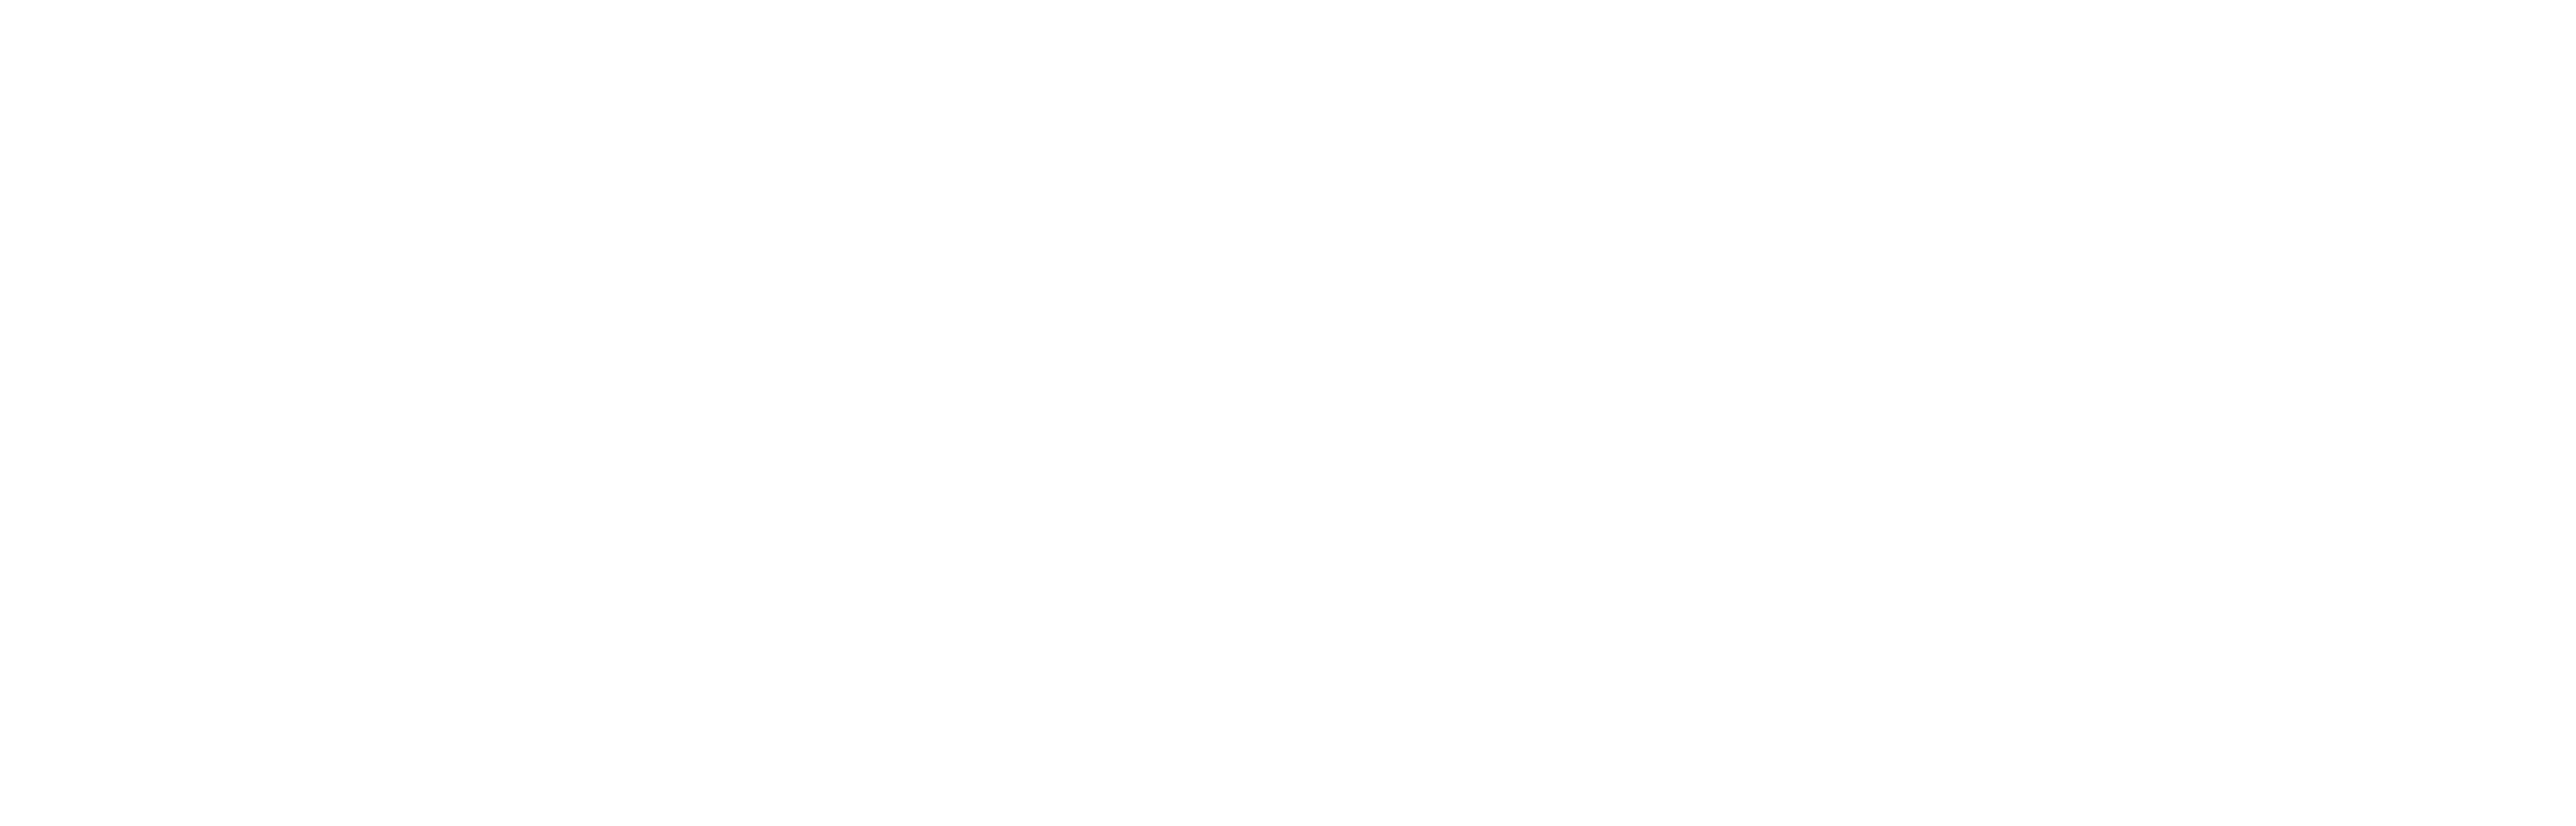 Dave Koz Cruise Logo